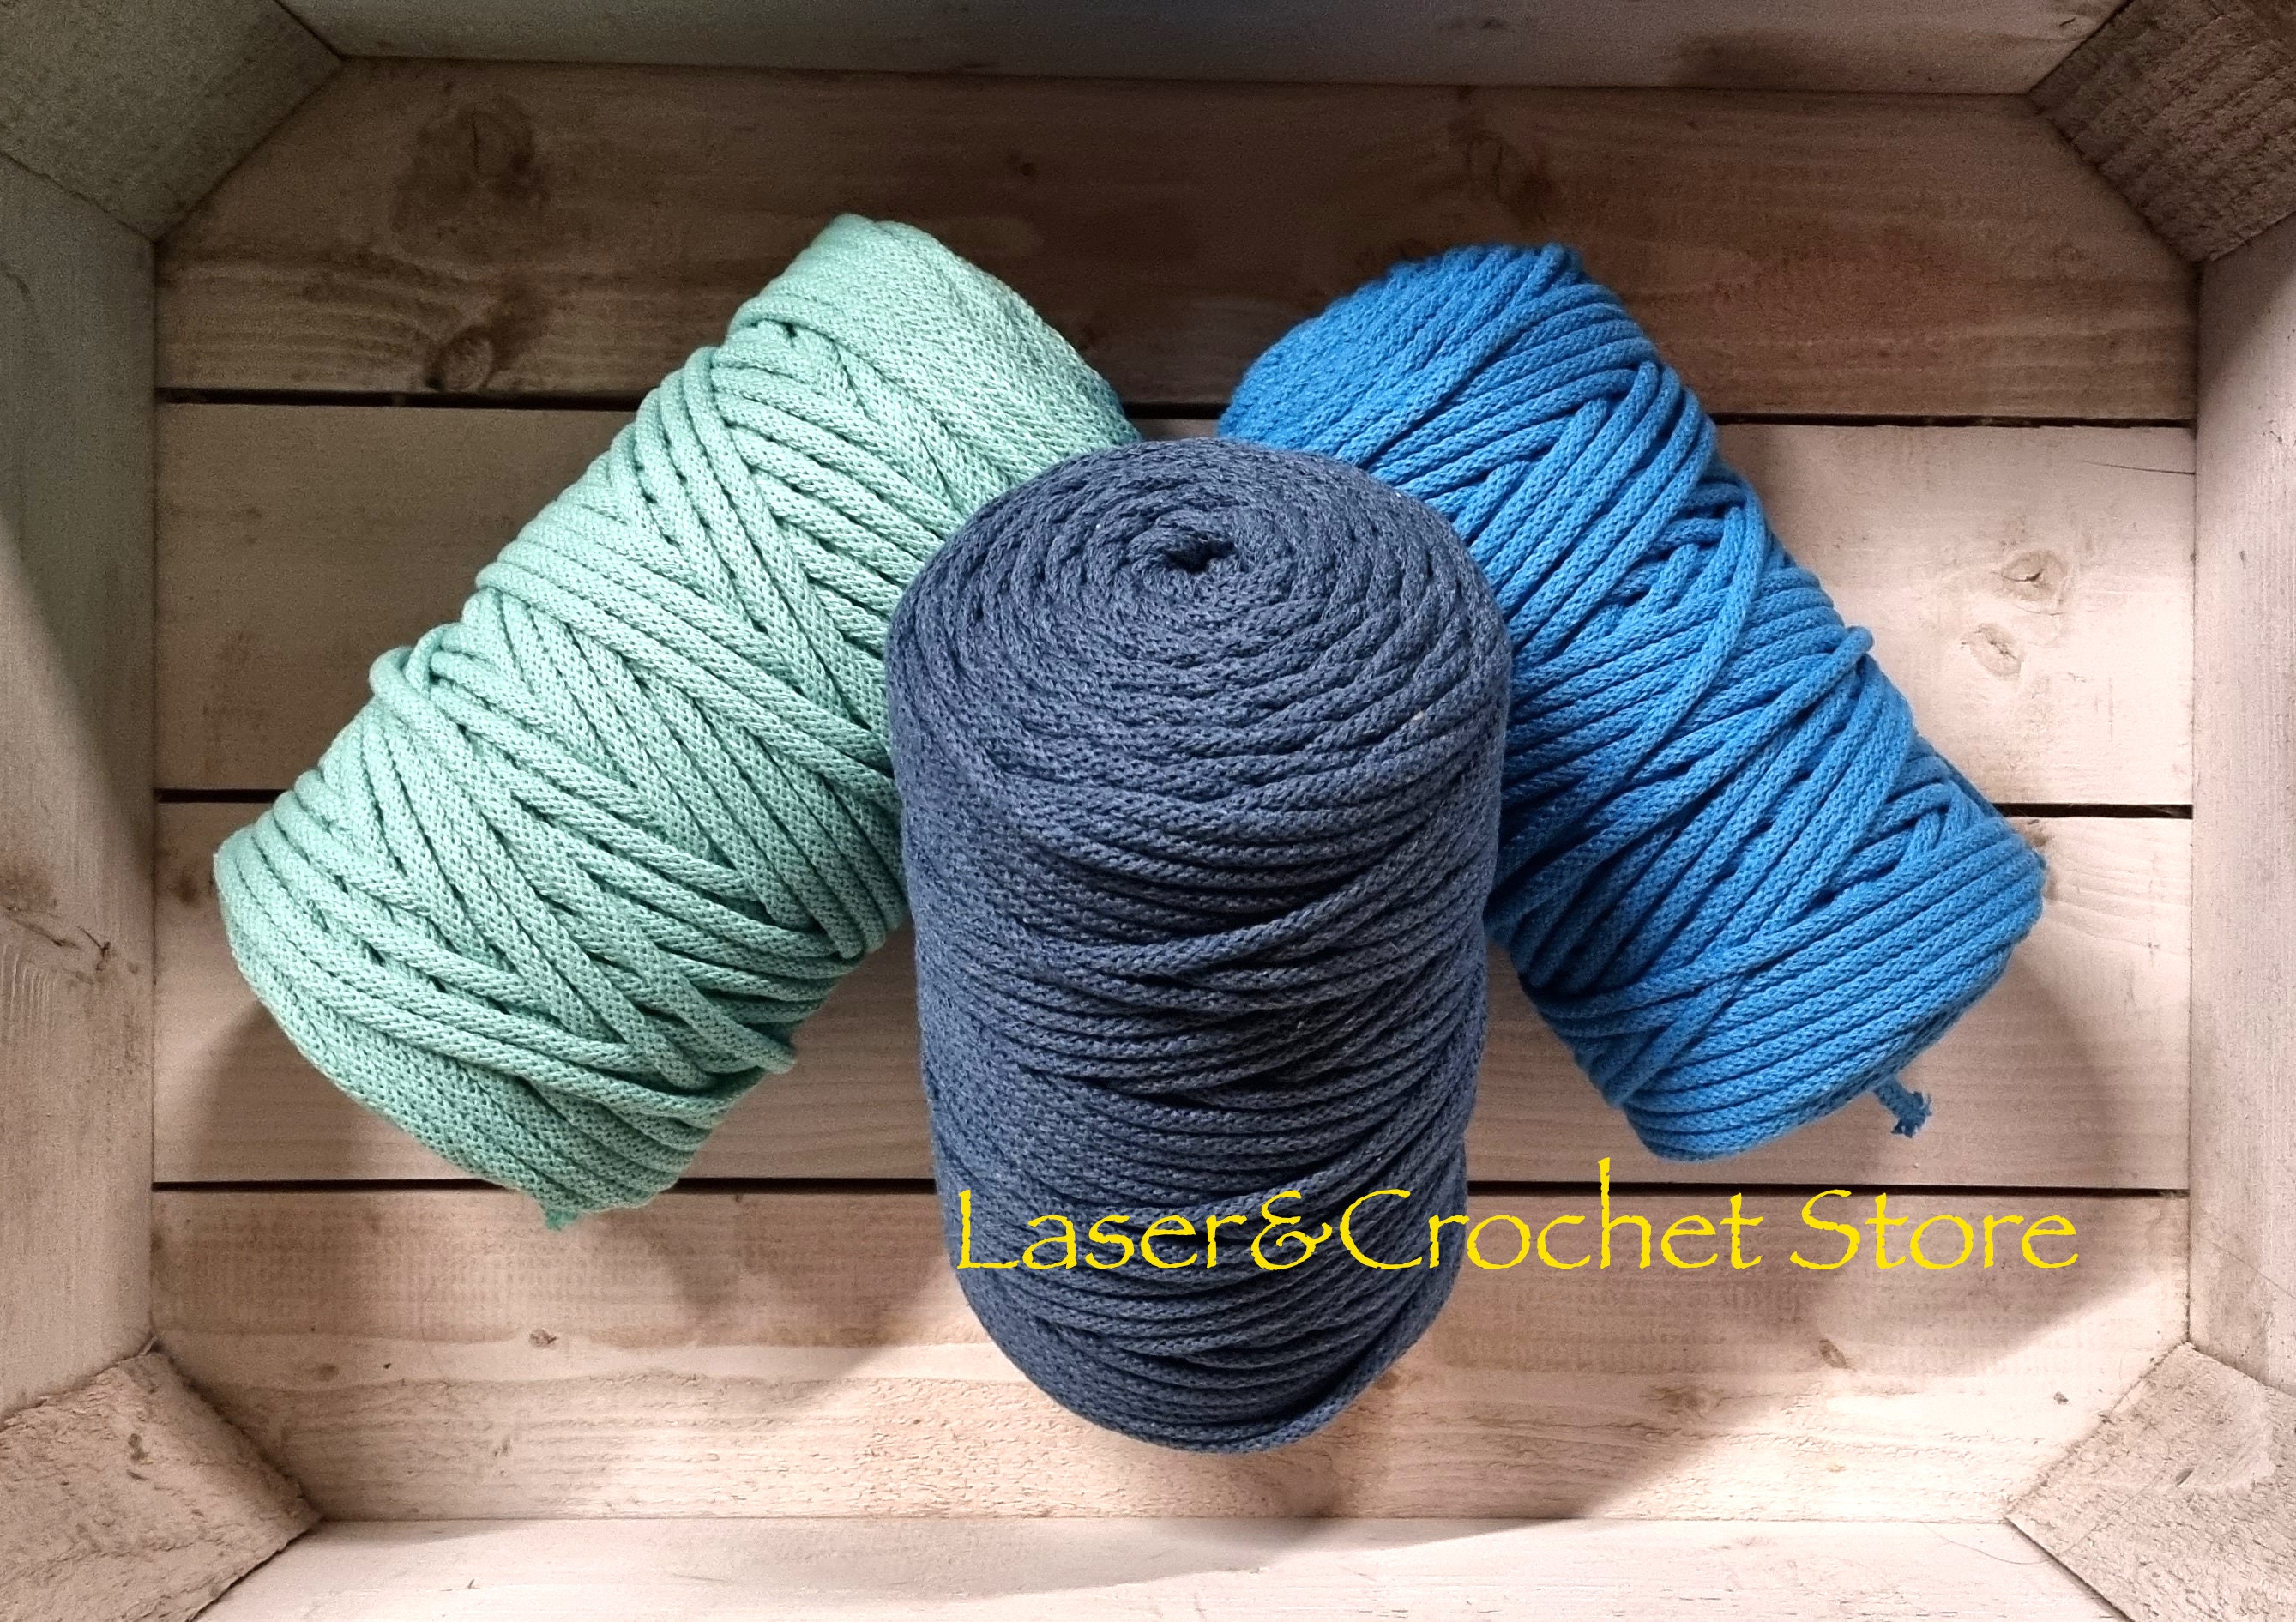 Macrame Cord, 5mm Crochet Cord, Knitting Rope, Yarn Supplies, Rope